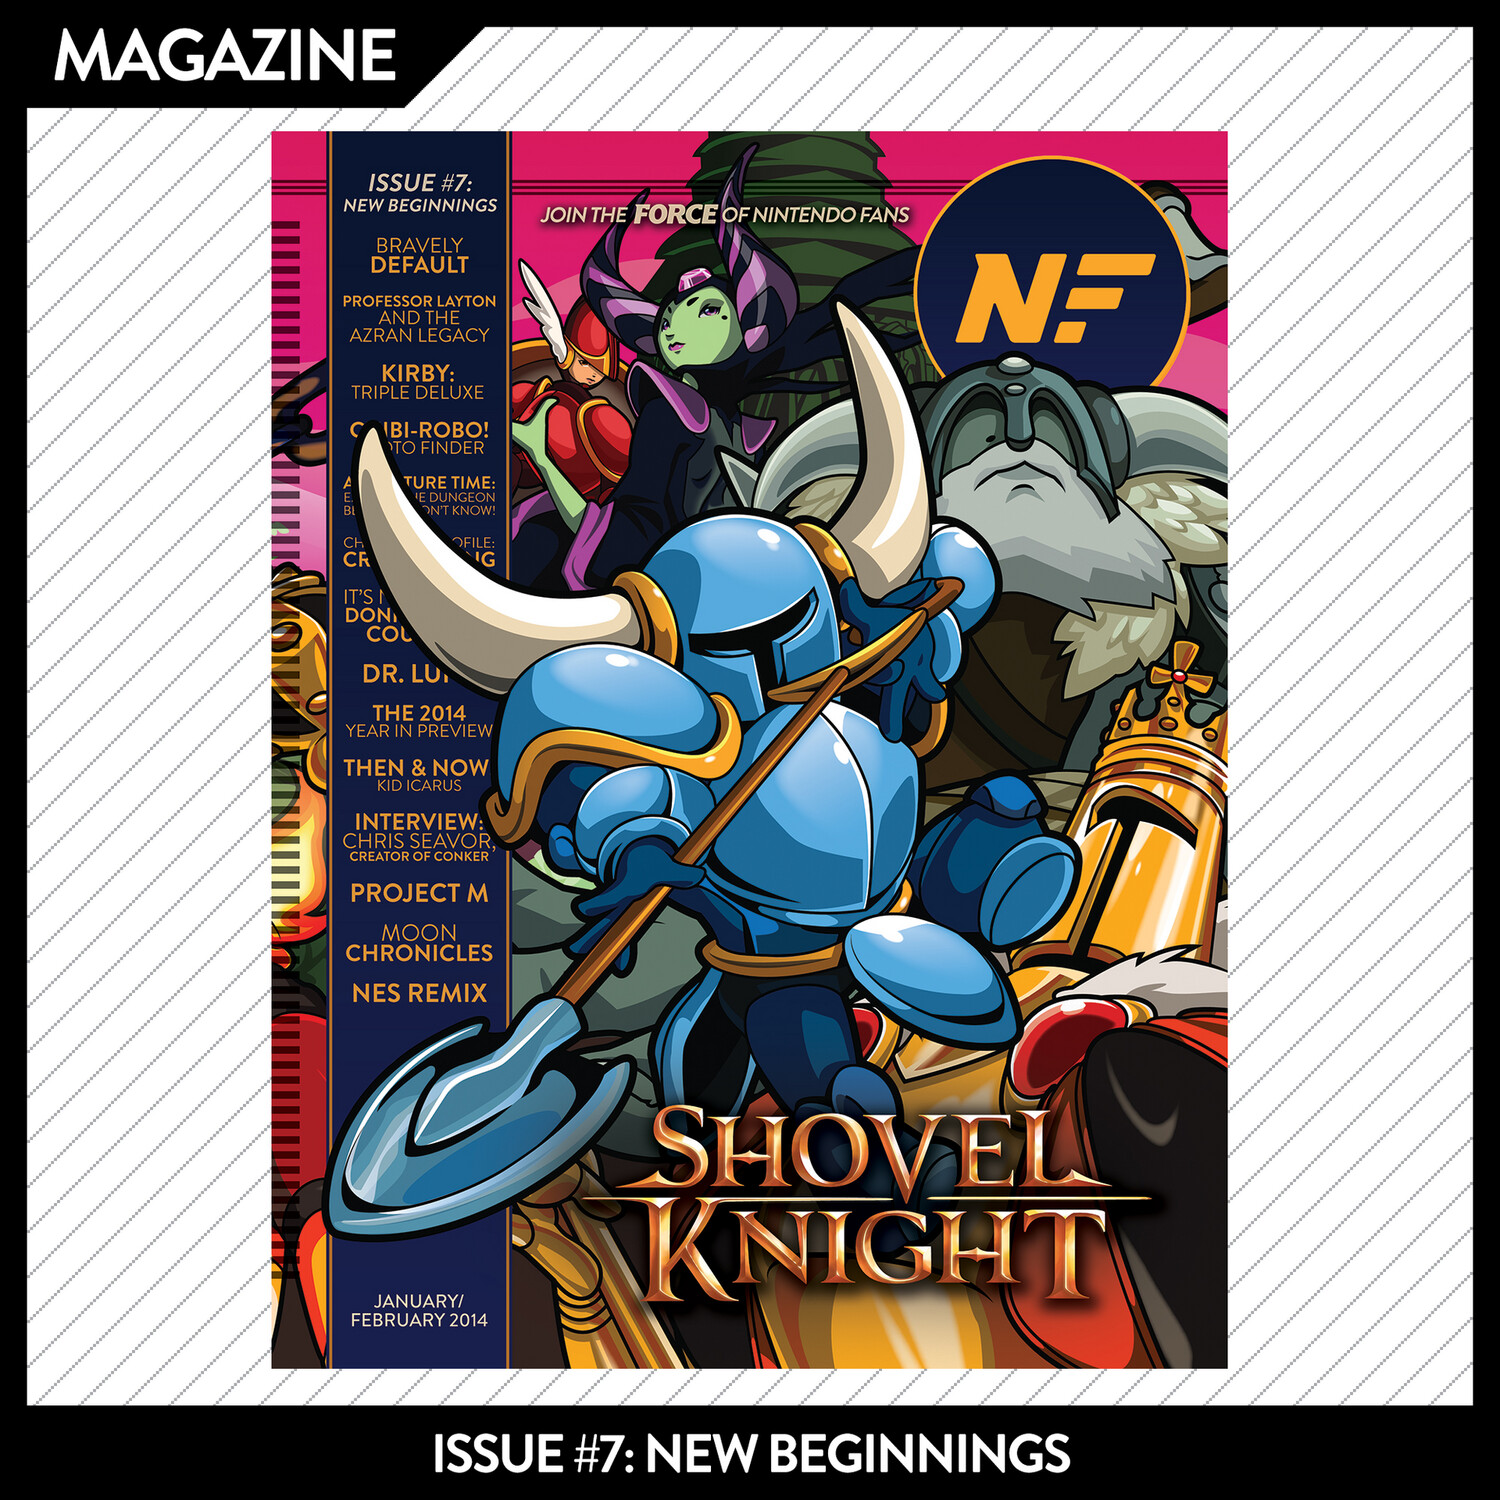 Issue #7: New Beginnings – January/February 2014